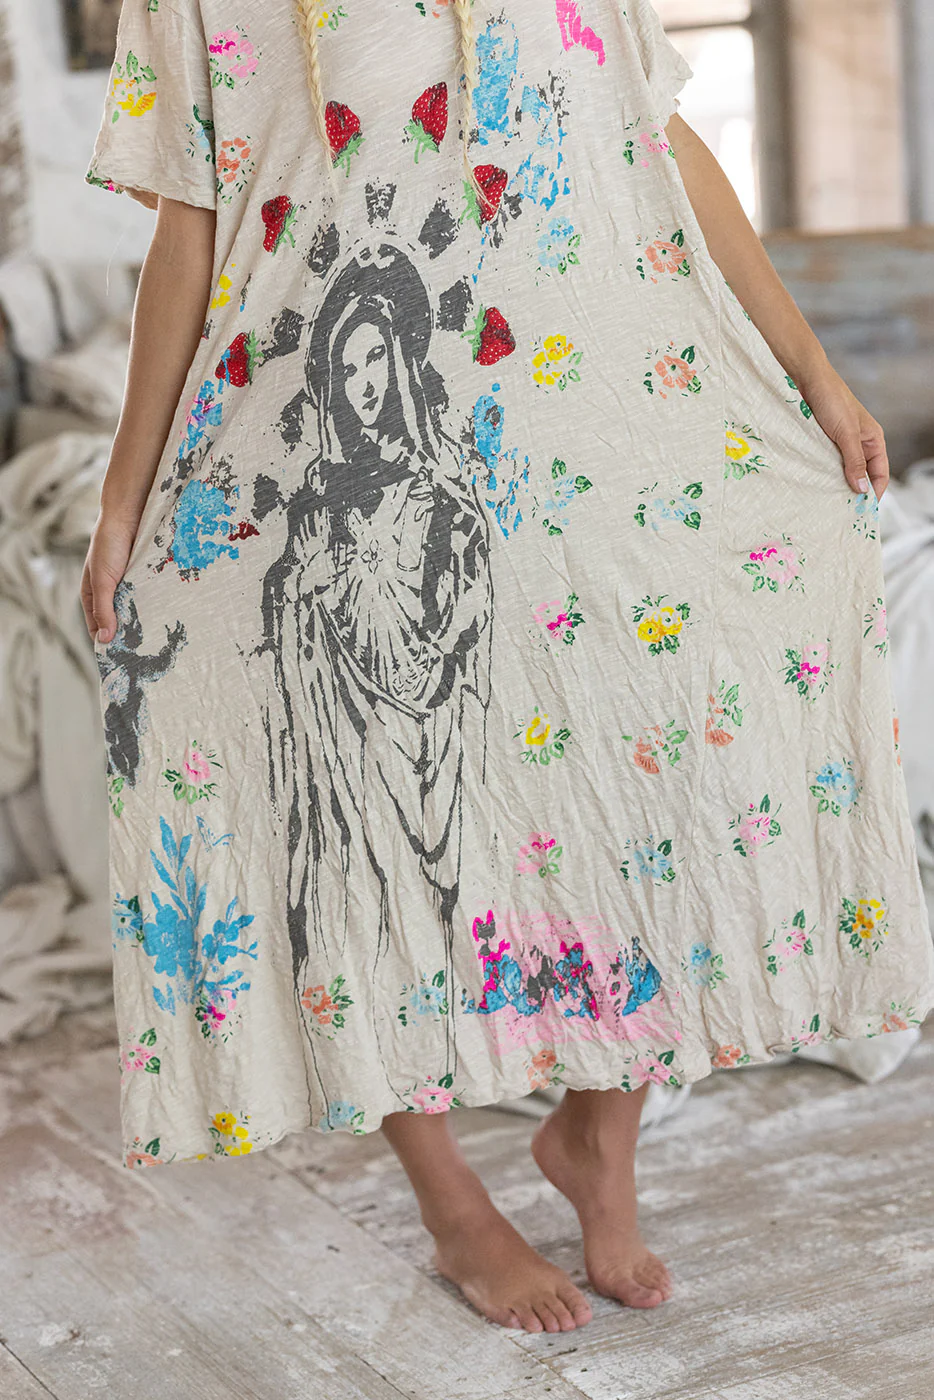 Magnolia Pearl Cotton Jersey Paola T Dress in Spring Joy Dress 1202